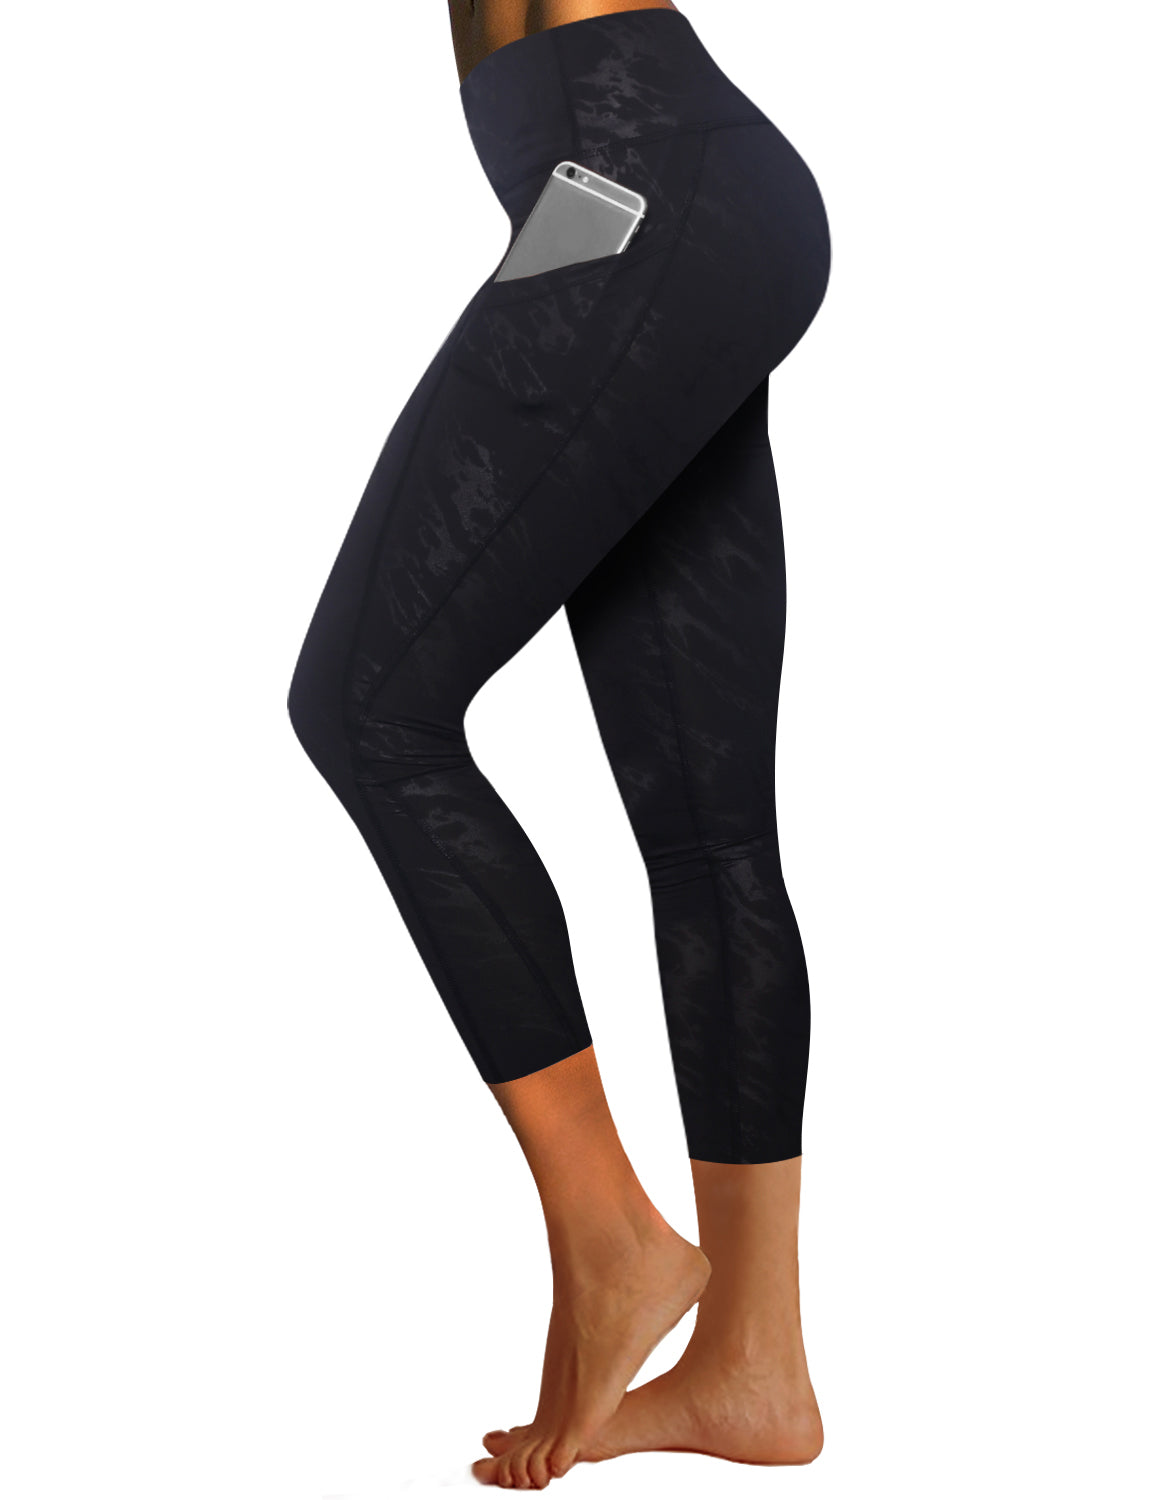 22" inseam 3D Printed Yoga Pants PAINT